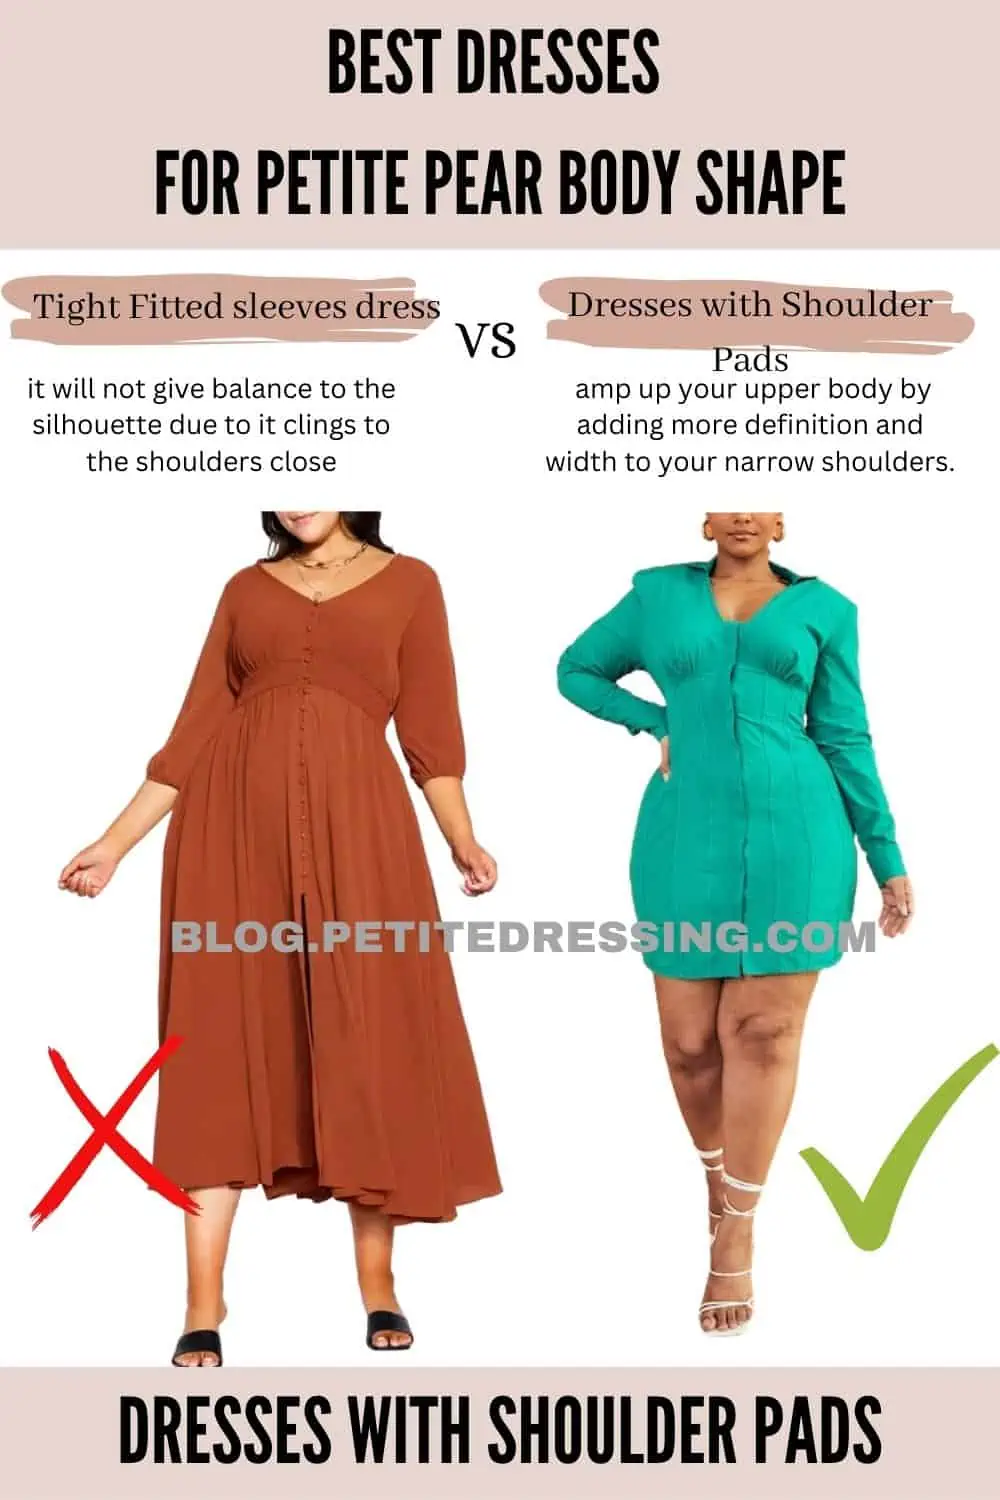 Dresses Style Guide for Petite Pear Body Shape - Petite Dressing